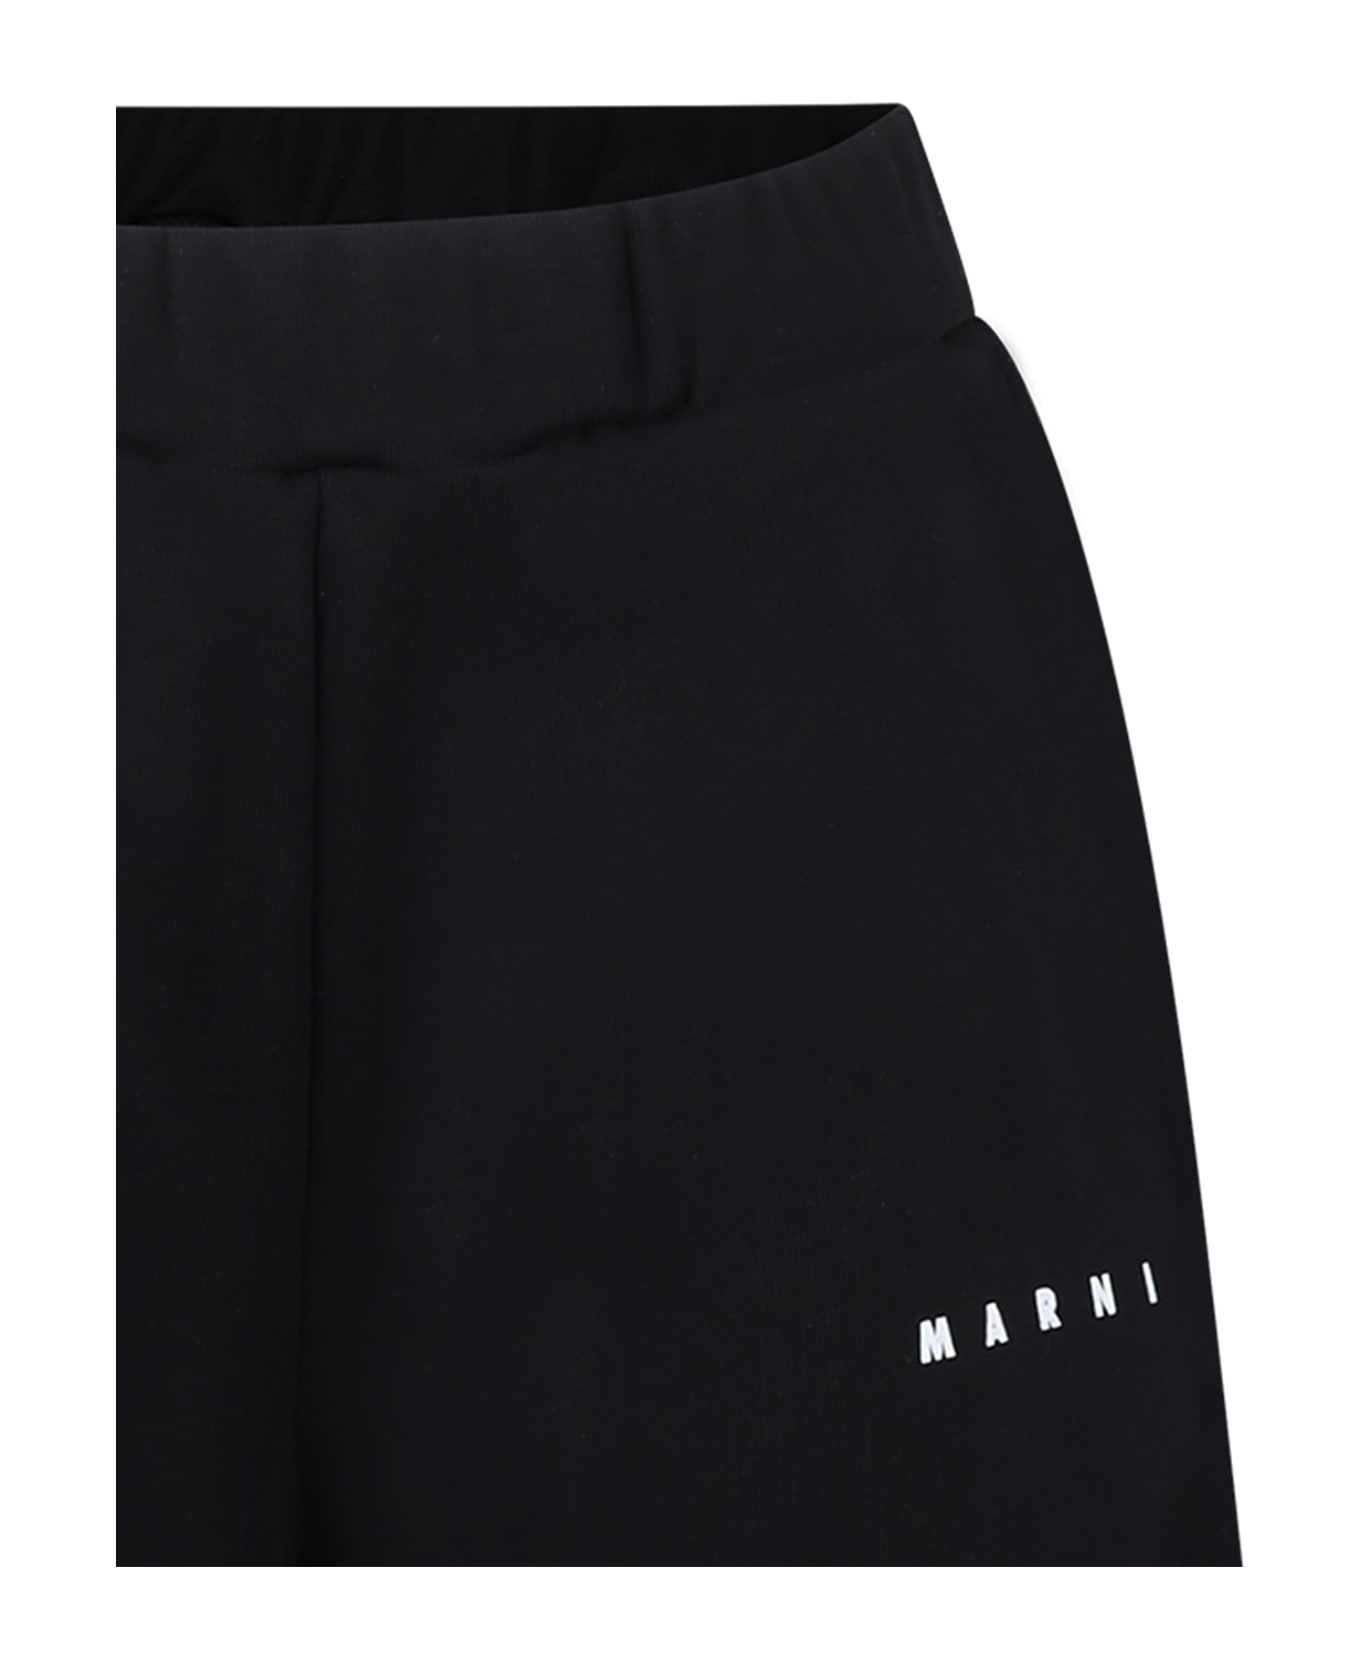 Marni Black Shorts For Kids With Logo - Black